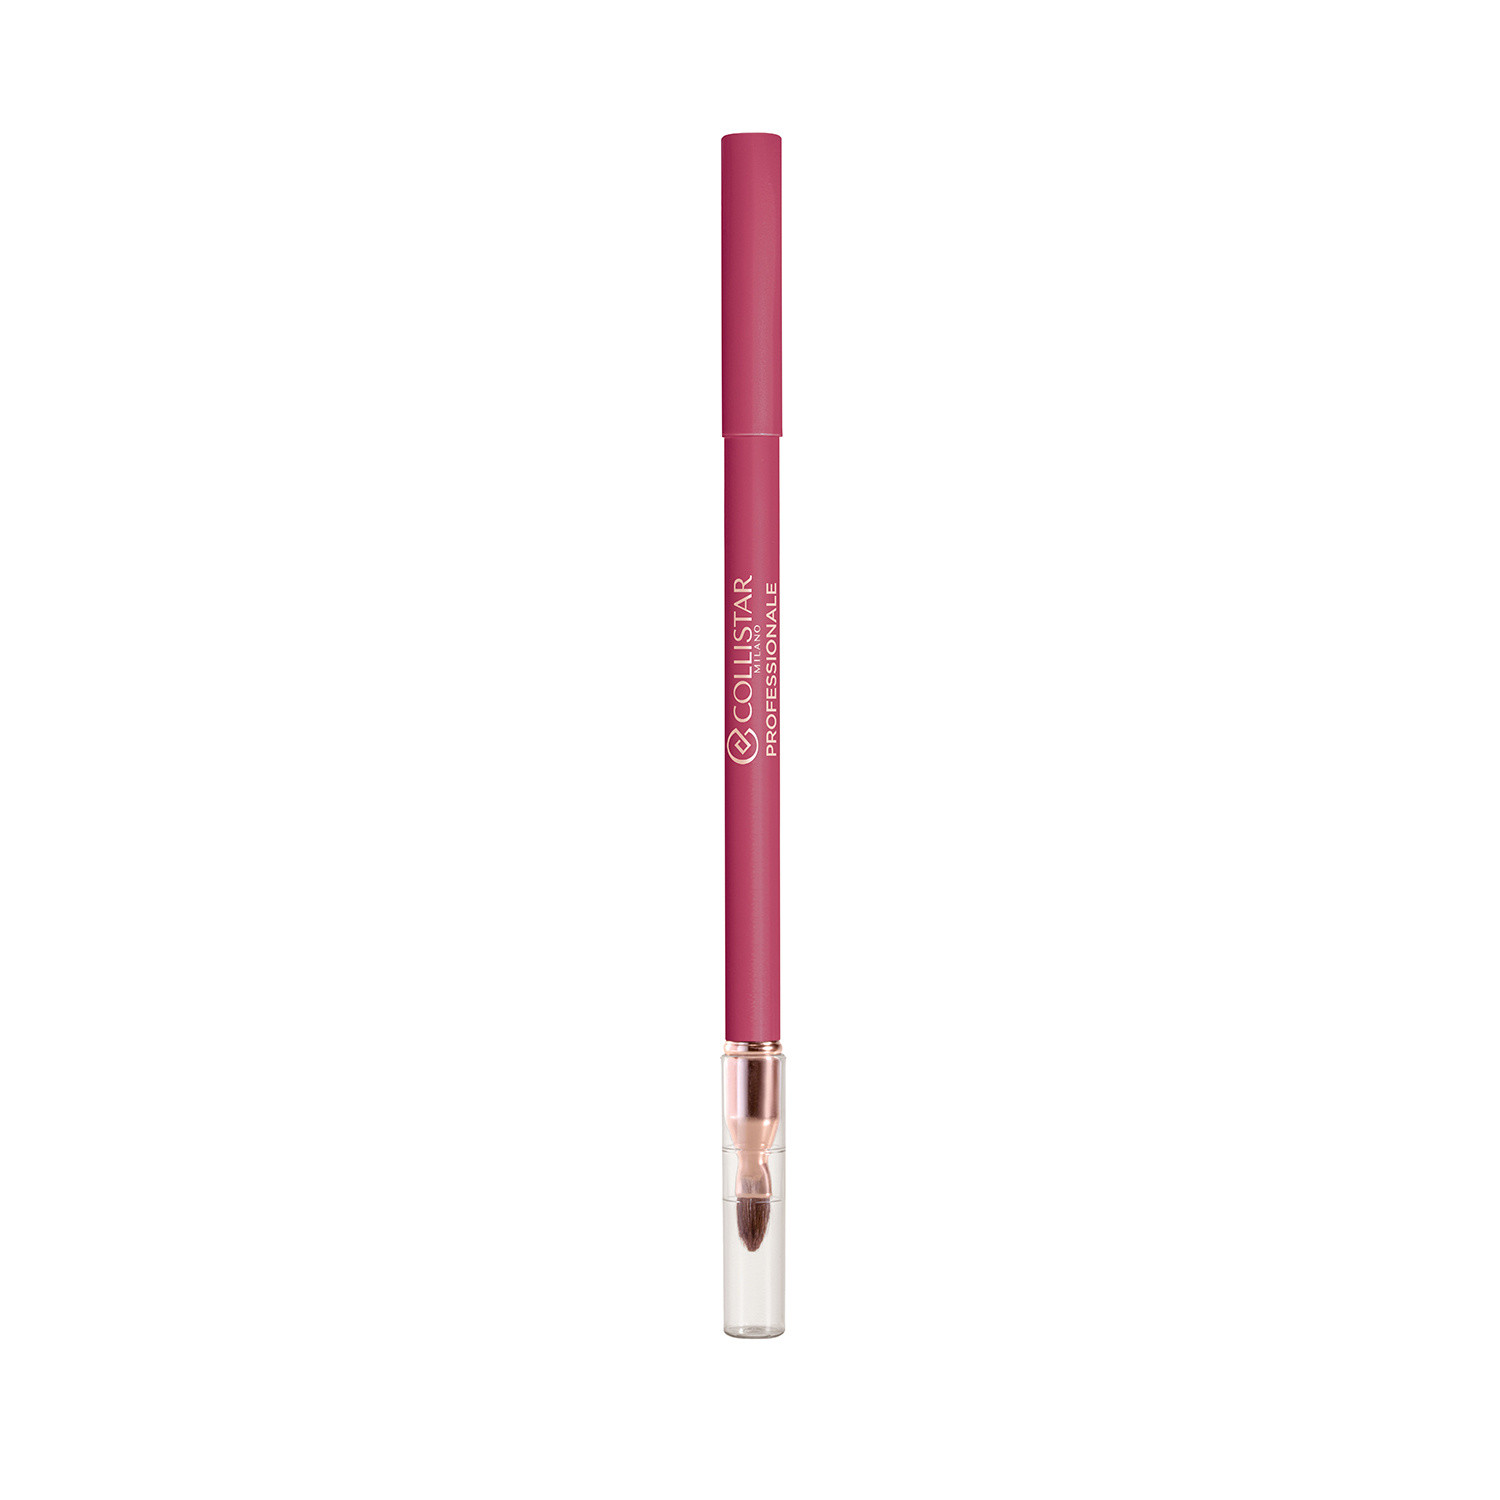 Collistar - Professional long lasting lip pencil - 113 Autumn Berry, Pink Flamingo, large image number 0